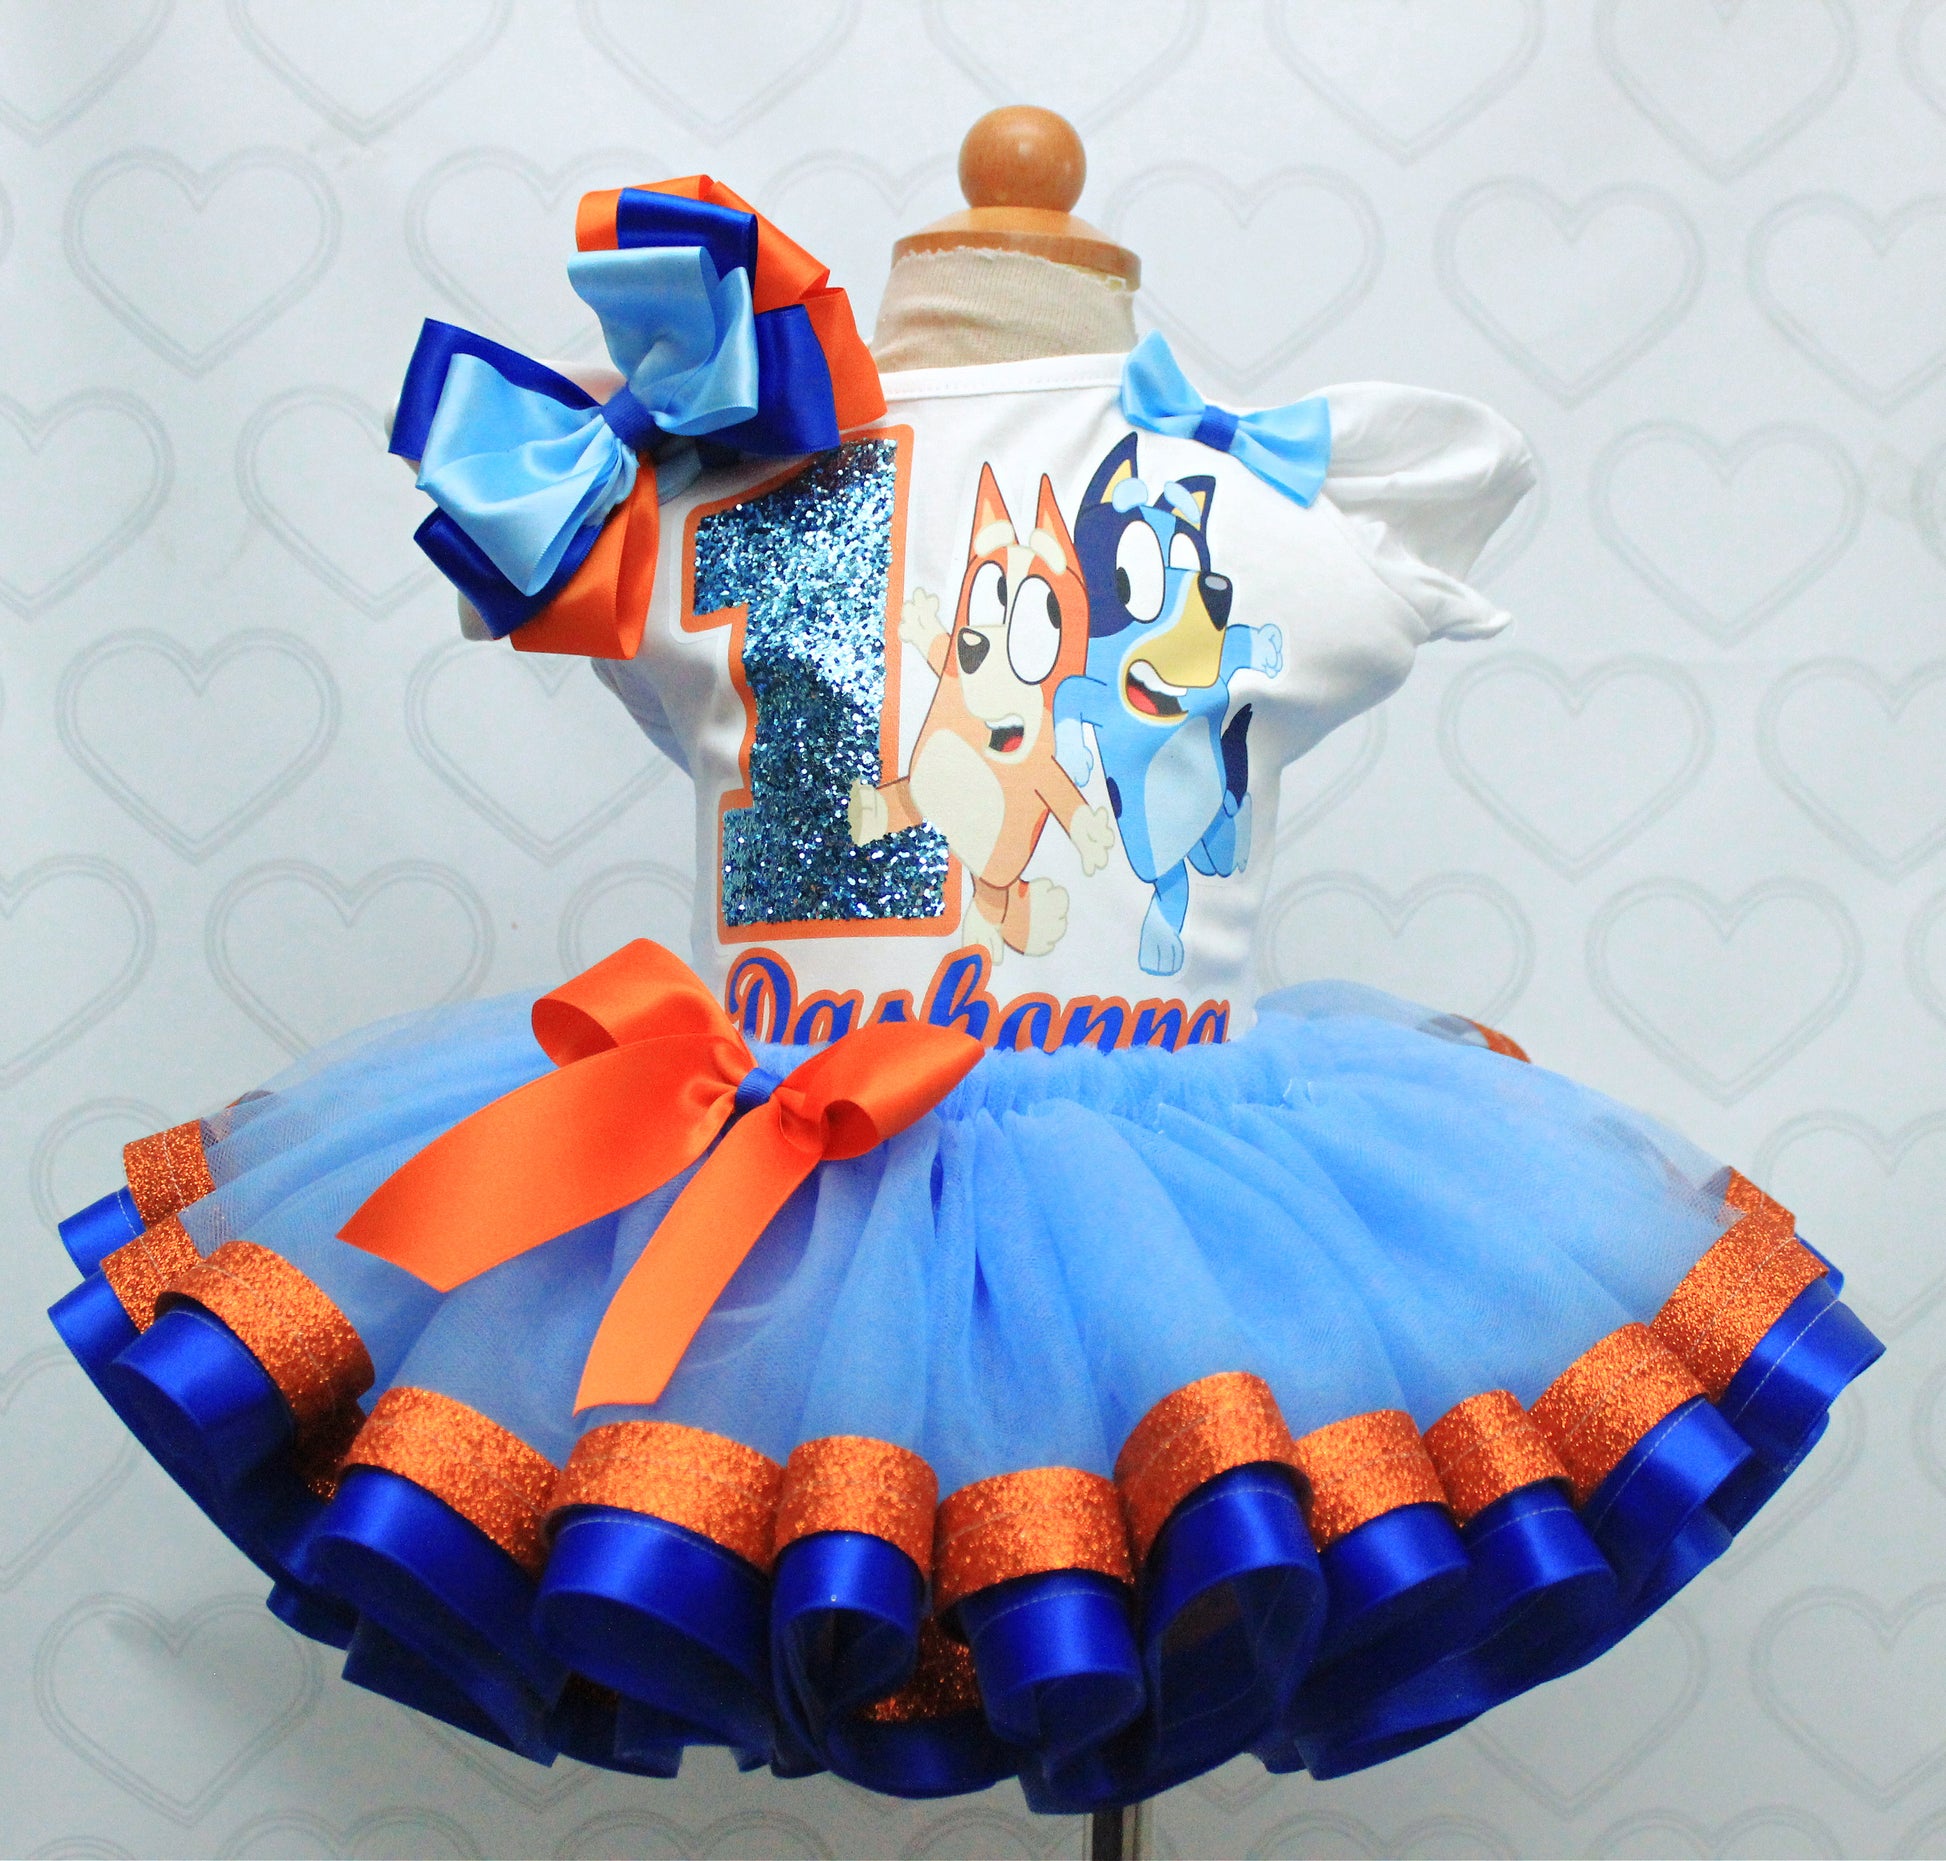 Bluey birthday outfit – ThePetitePineapple